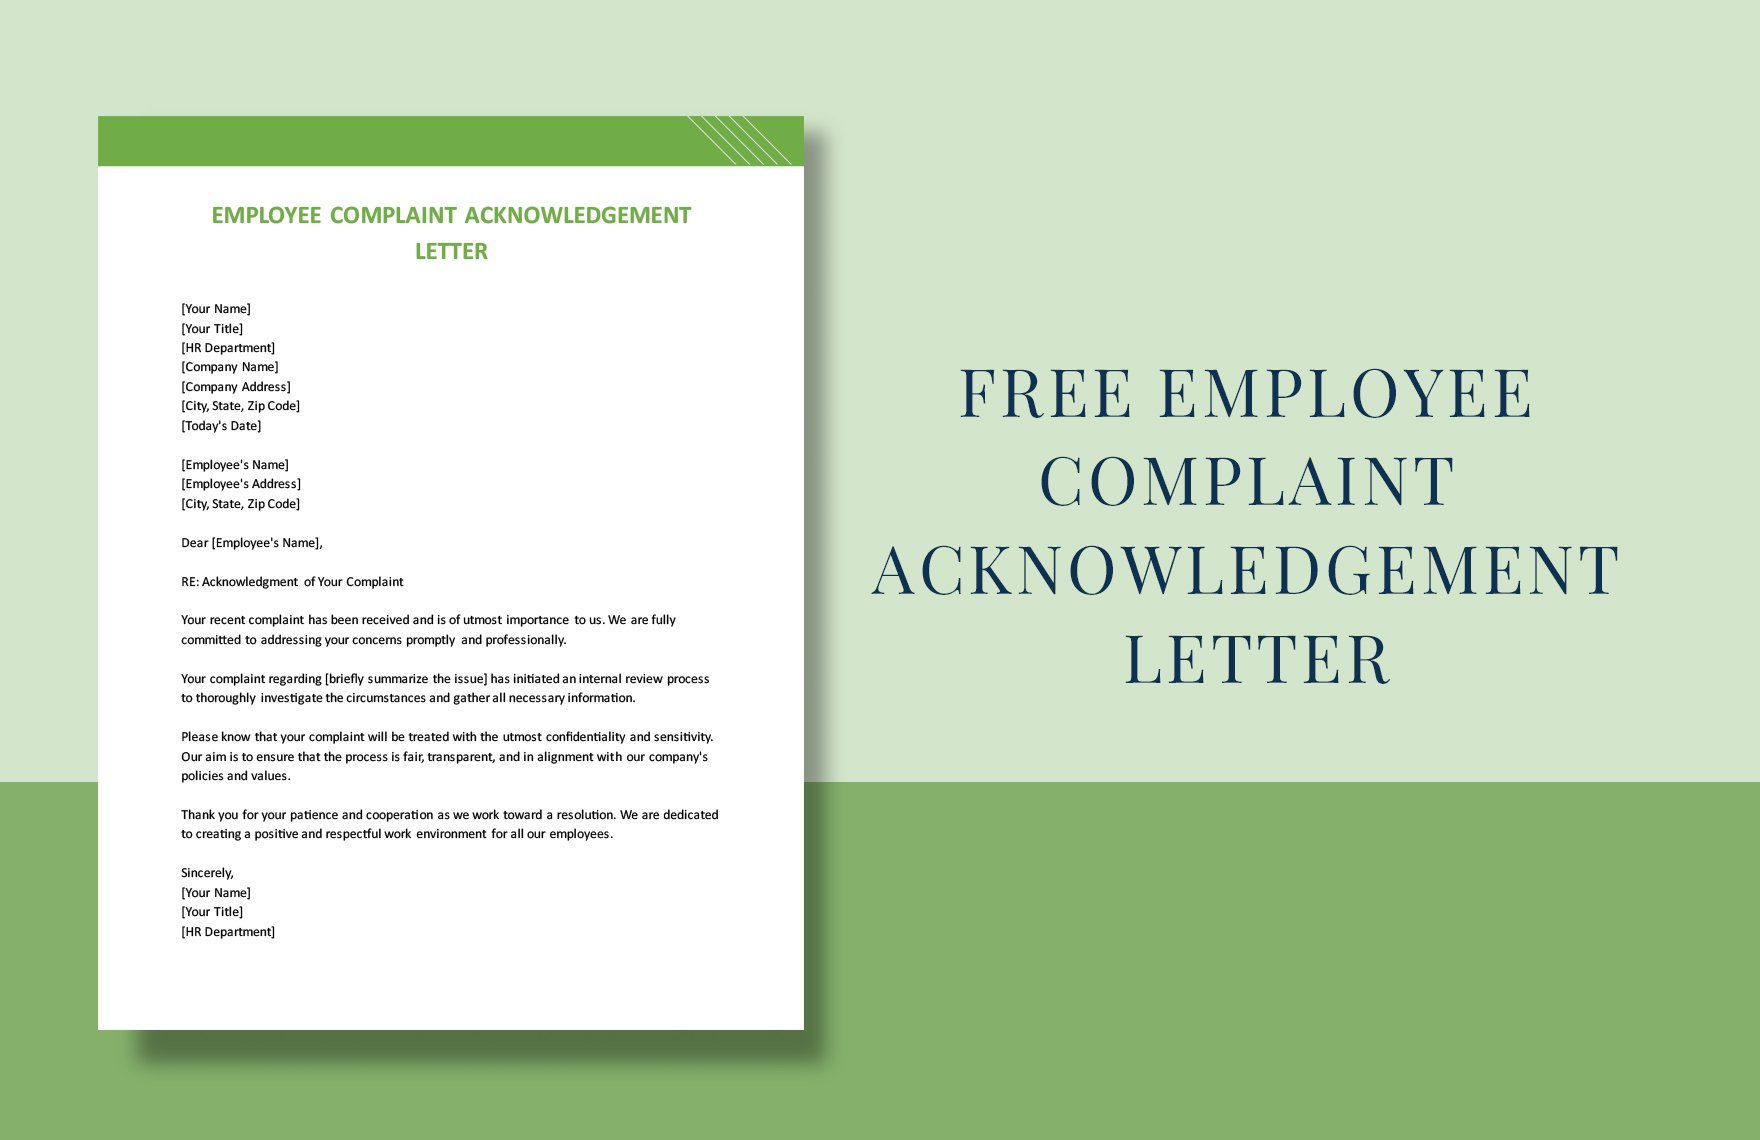 Employee Complaint Acknowledgement Letter